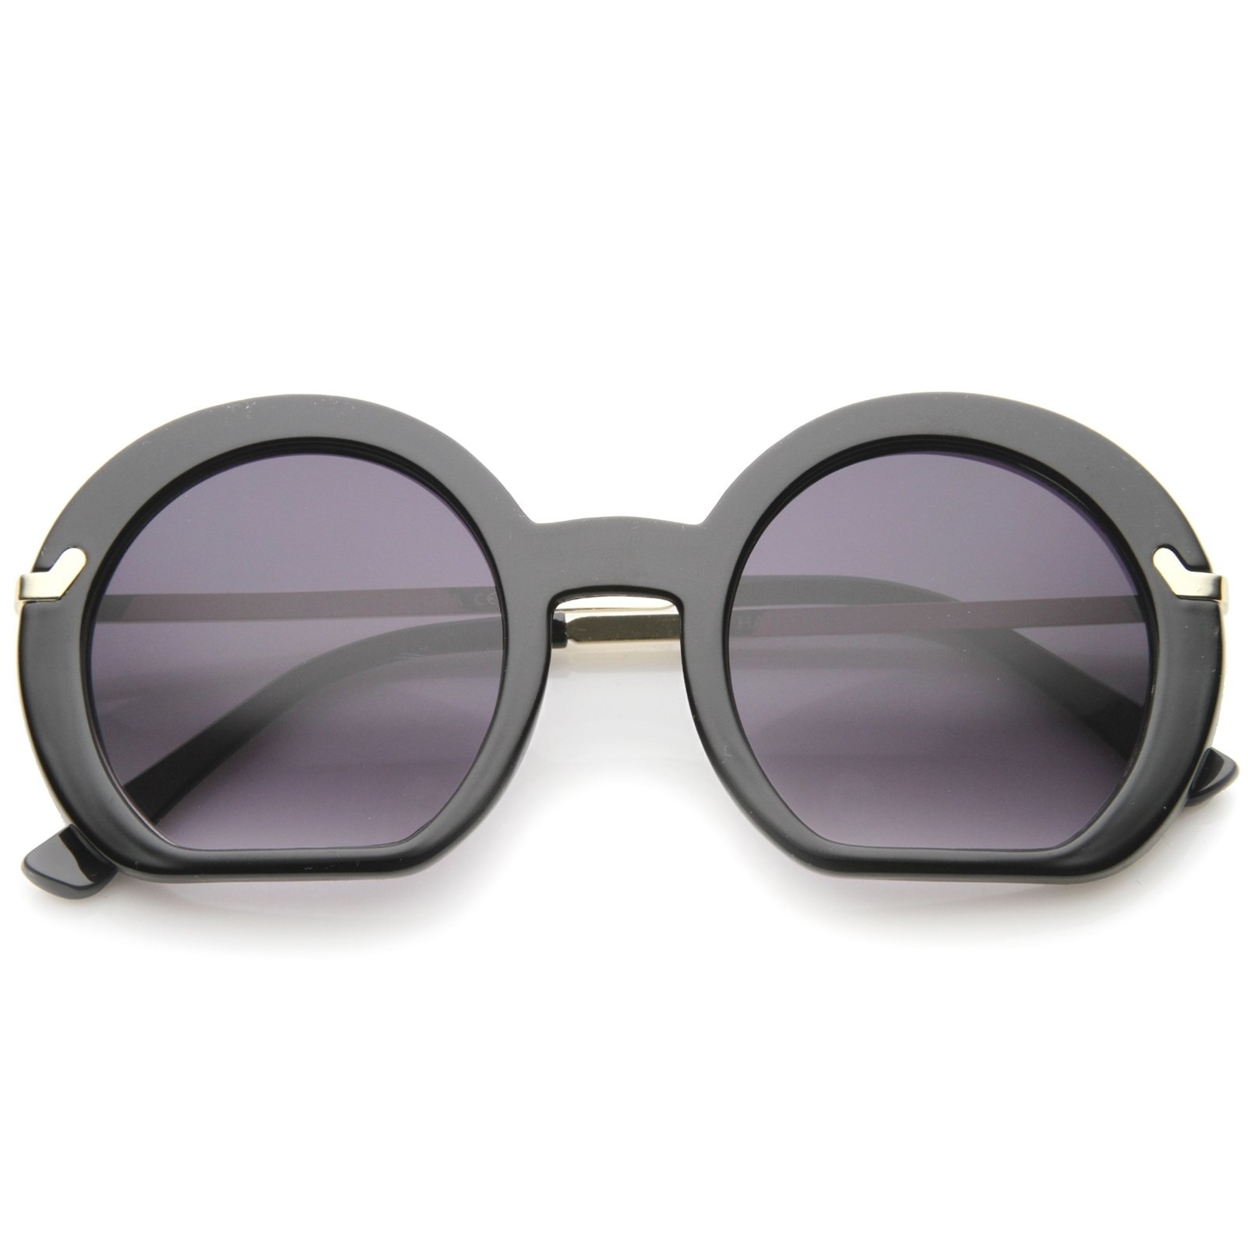 Women's High Fashion Flat Bottom Oversize Round Sunglasses 50mm - Tortoise / Amber